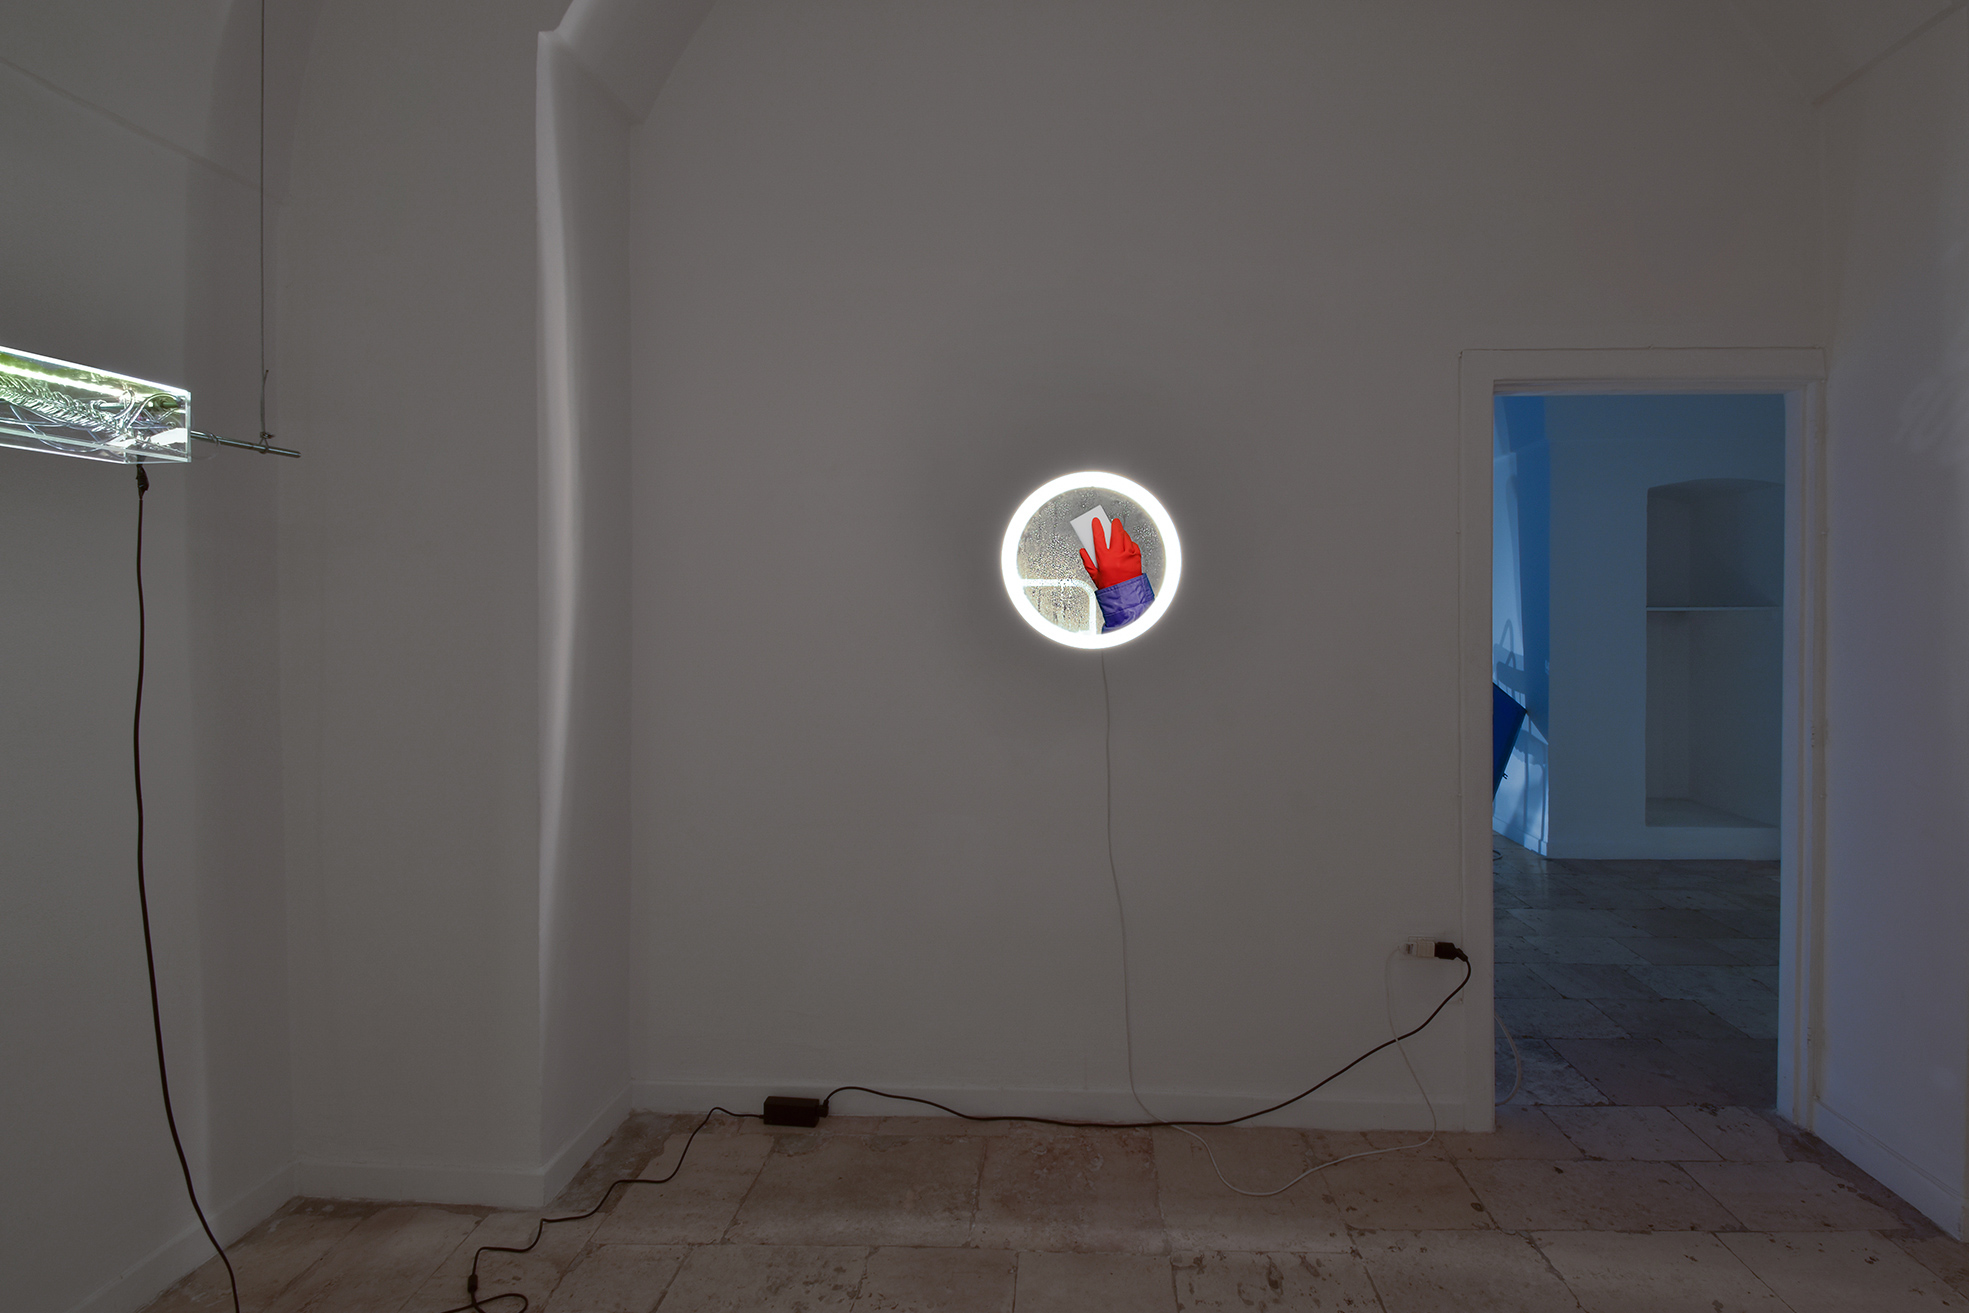 Maurizio Vicerè, Camouflage an’ Soda #1, Storjorm mirror, diffused led, print, dew effect Diam. 47 cm. x 8 cm. 2018.